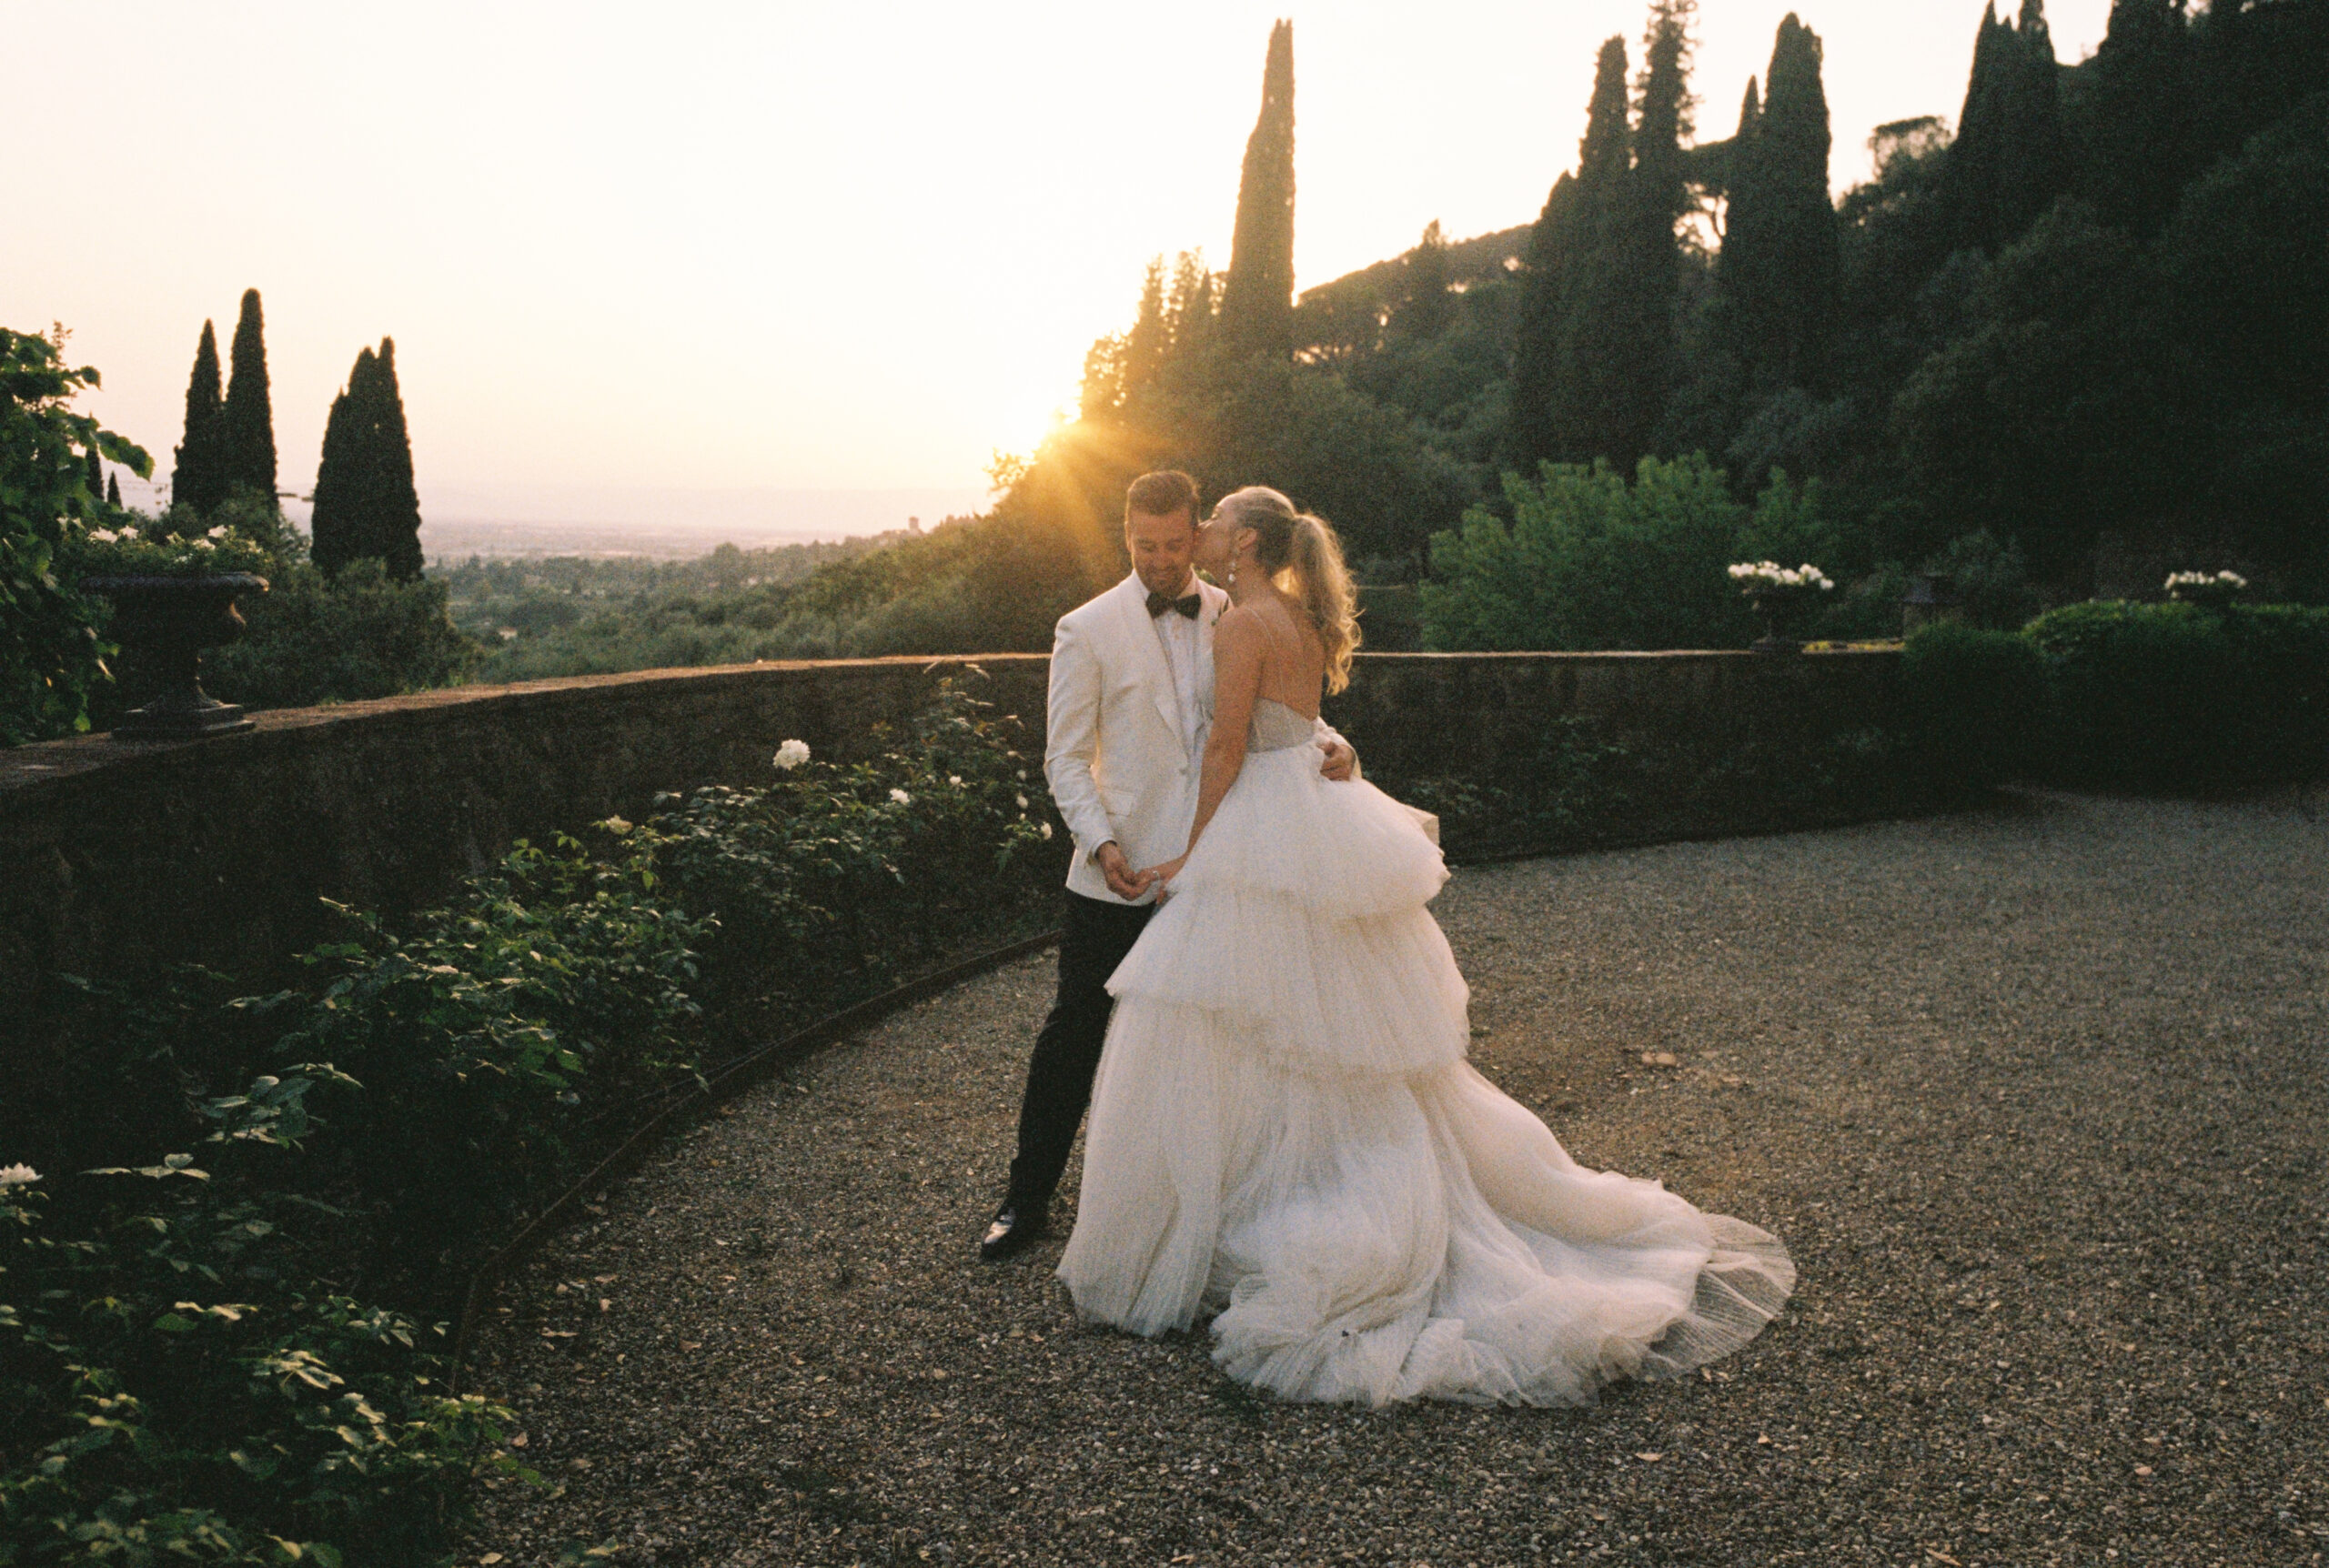 wedding photo in tuscany italy at sunset